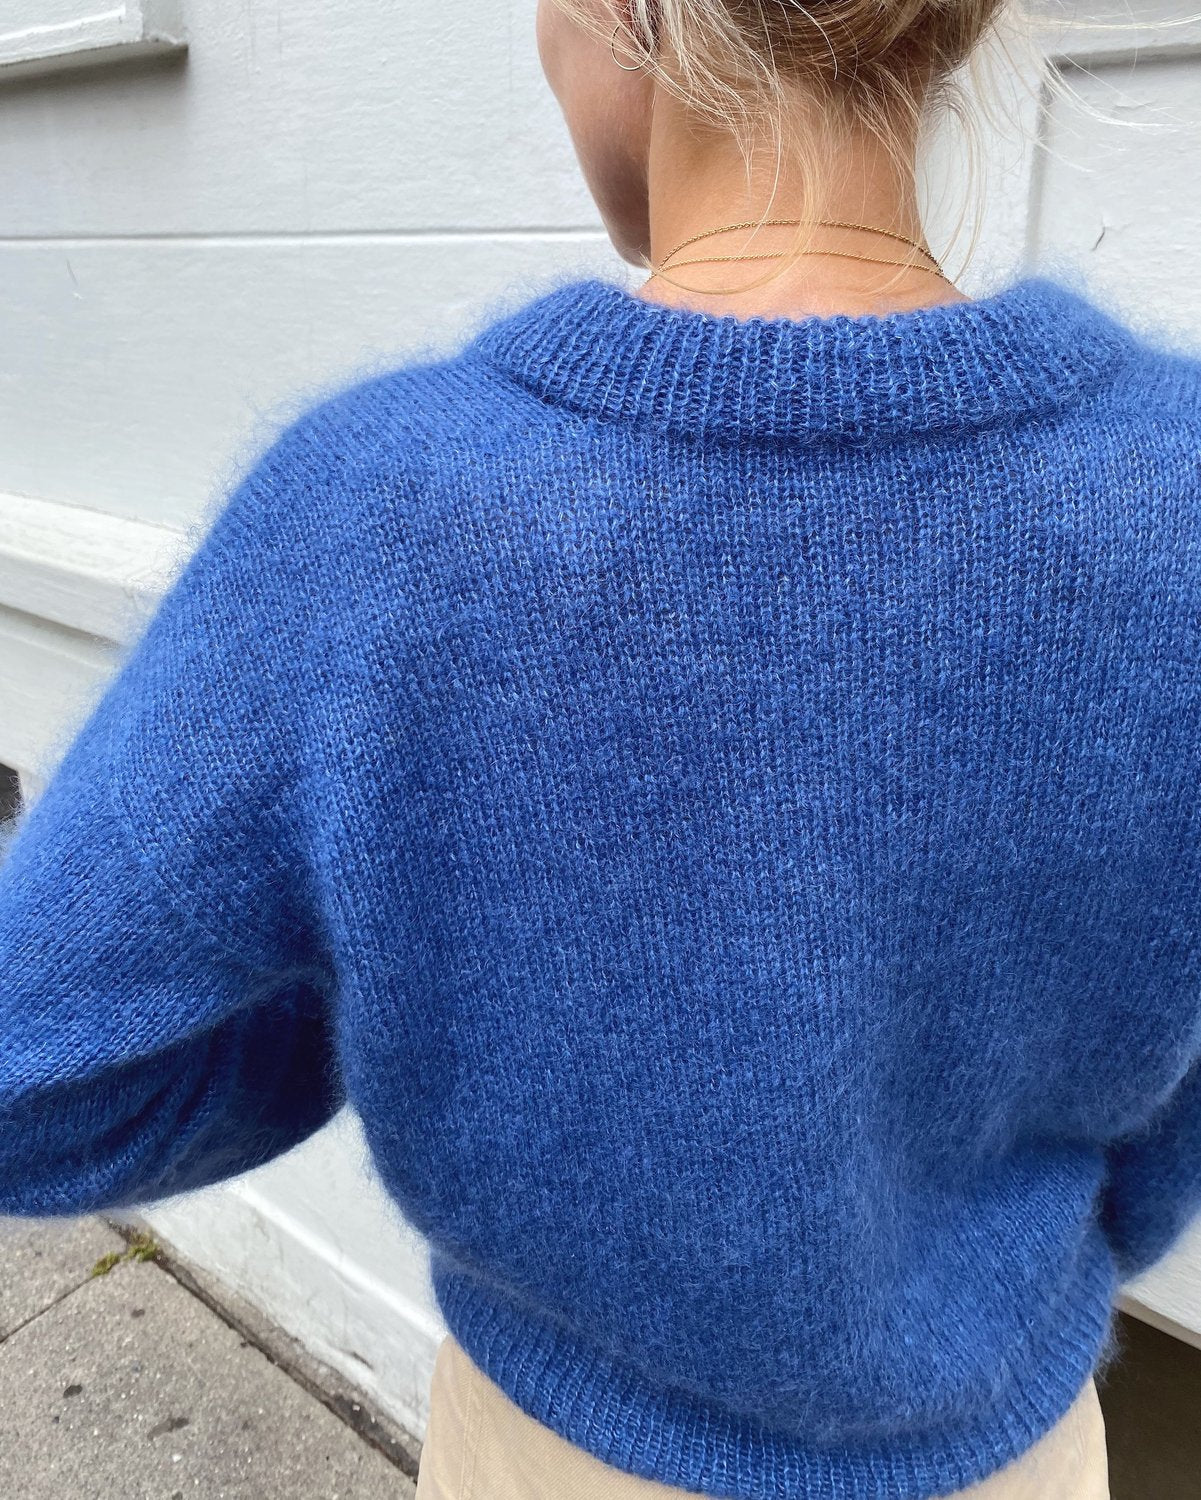 Stockholm Sweater V-Neck PetiteKnit - Strikkekit Cashmeresilke